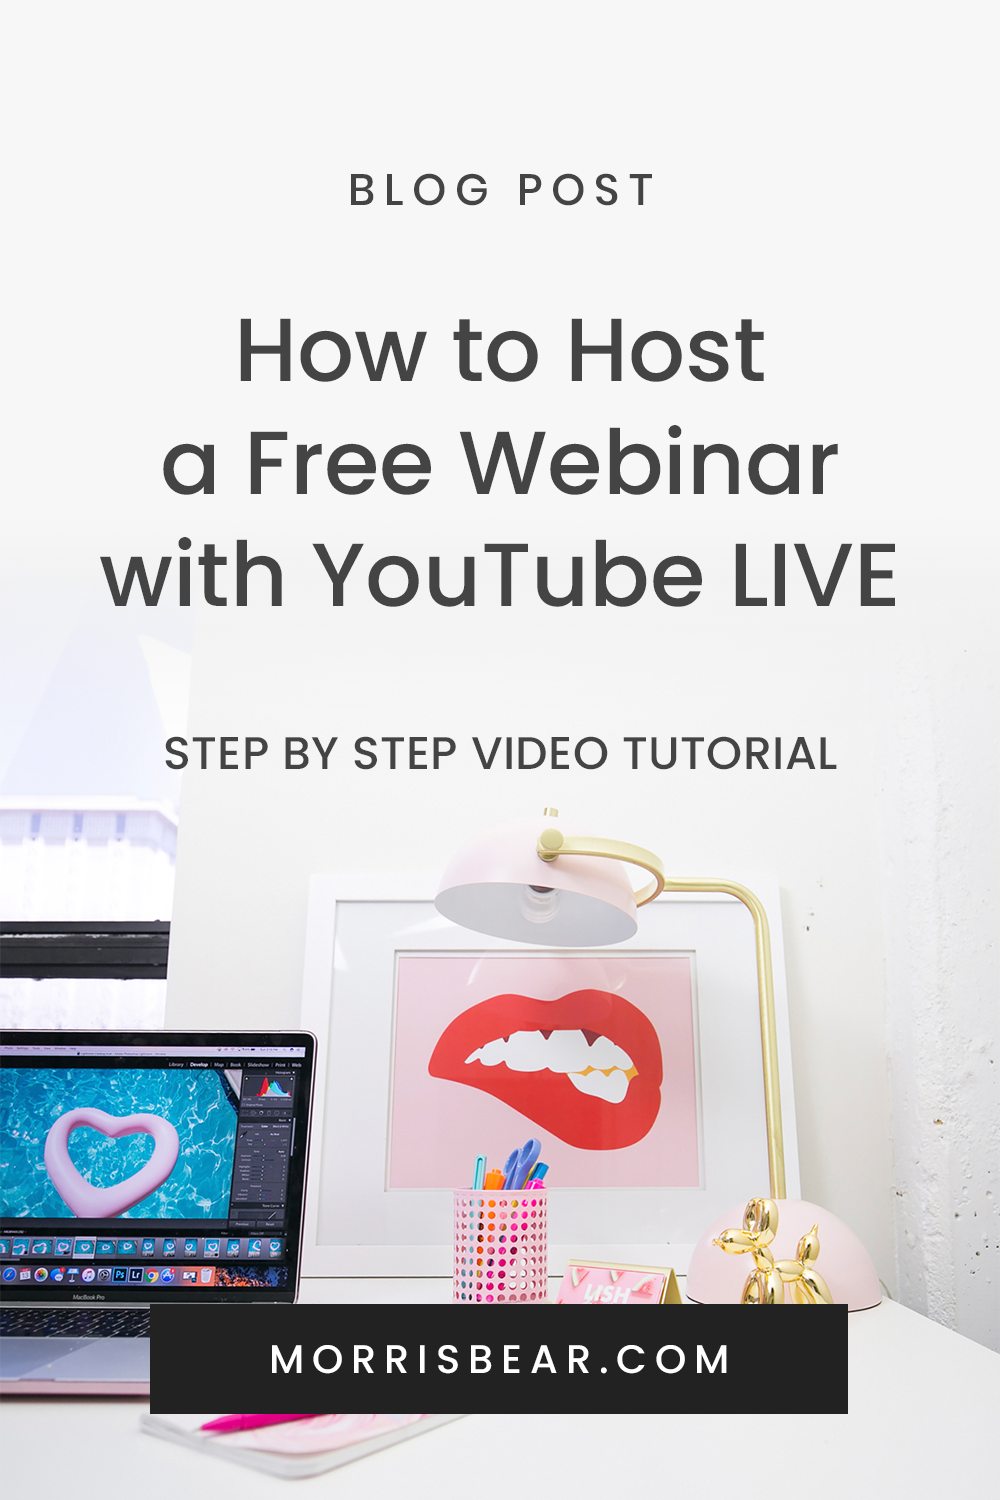 How to Host a Free Webinar on Youtube Live 2020